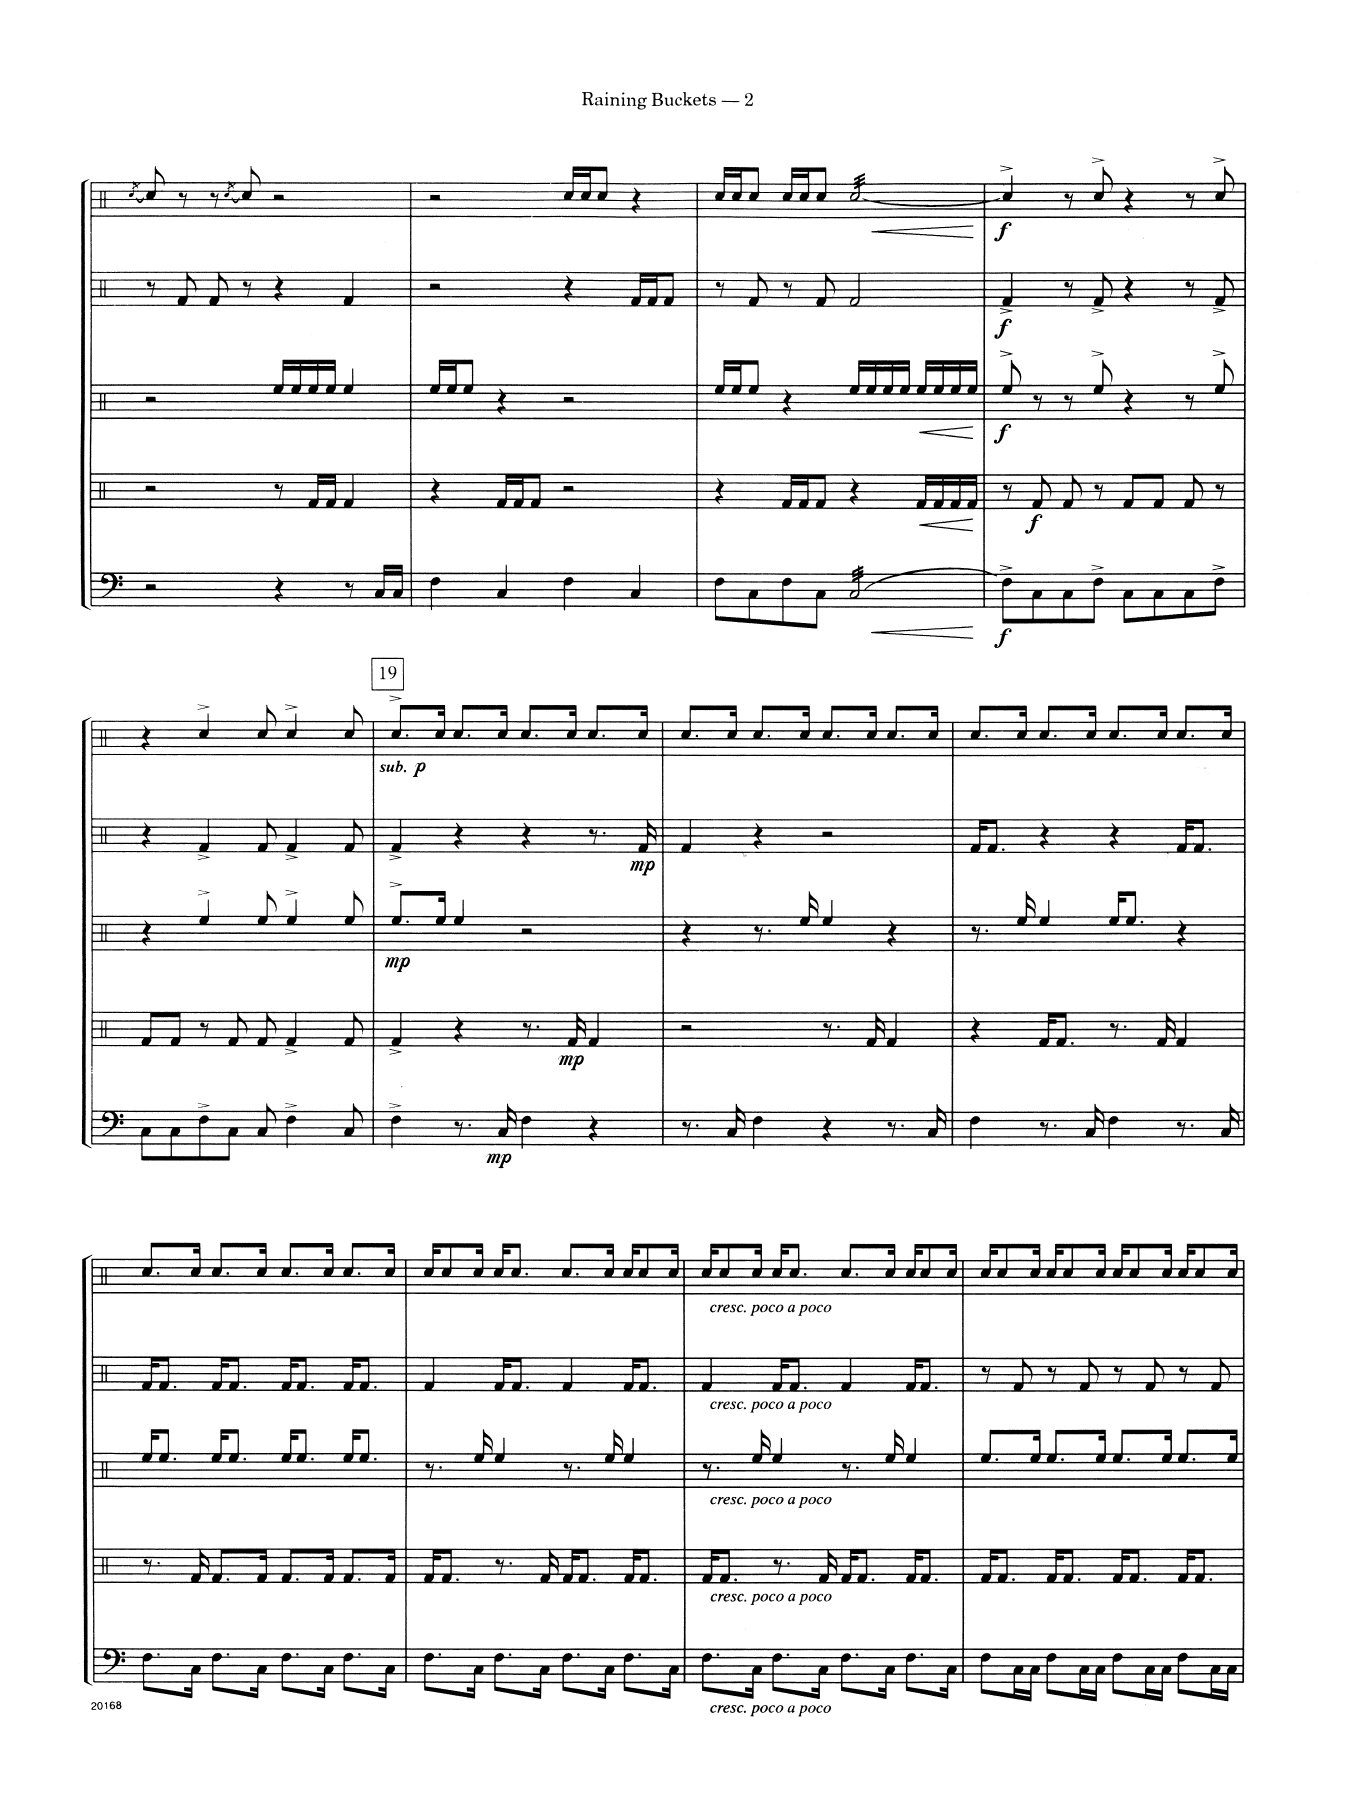 Download Murray Houllif Contest Ensembles For Intermediate Perc Sheet Music